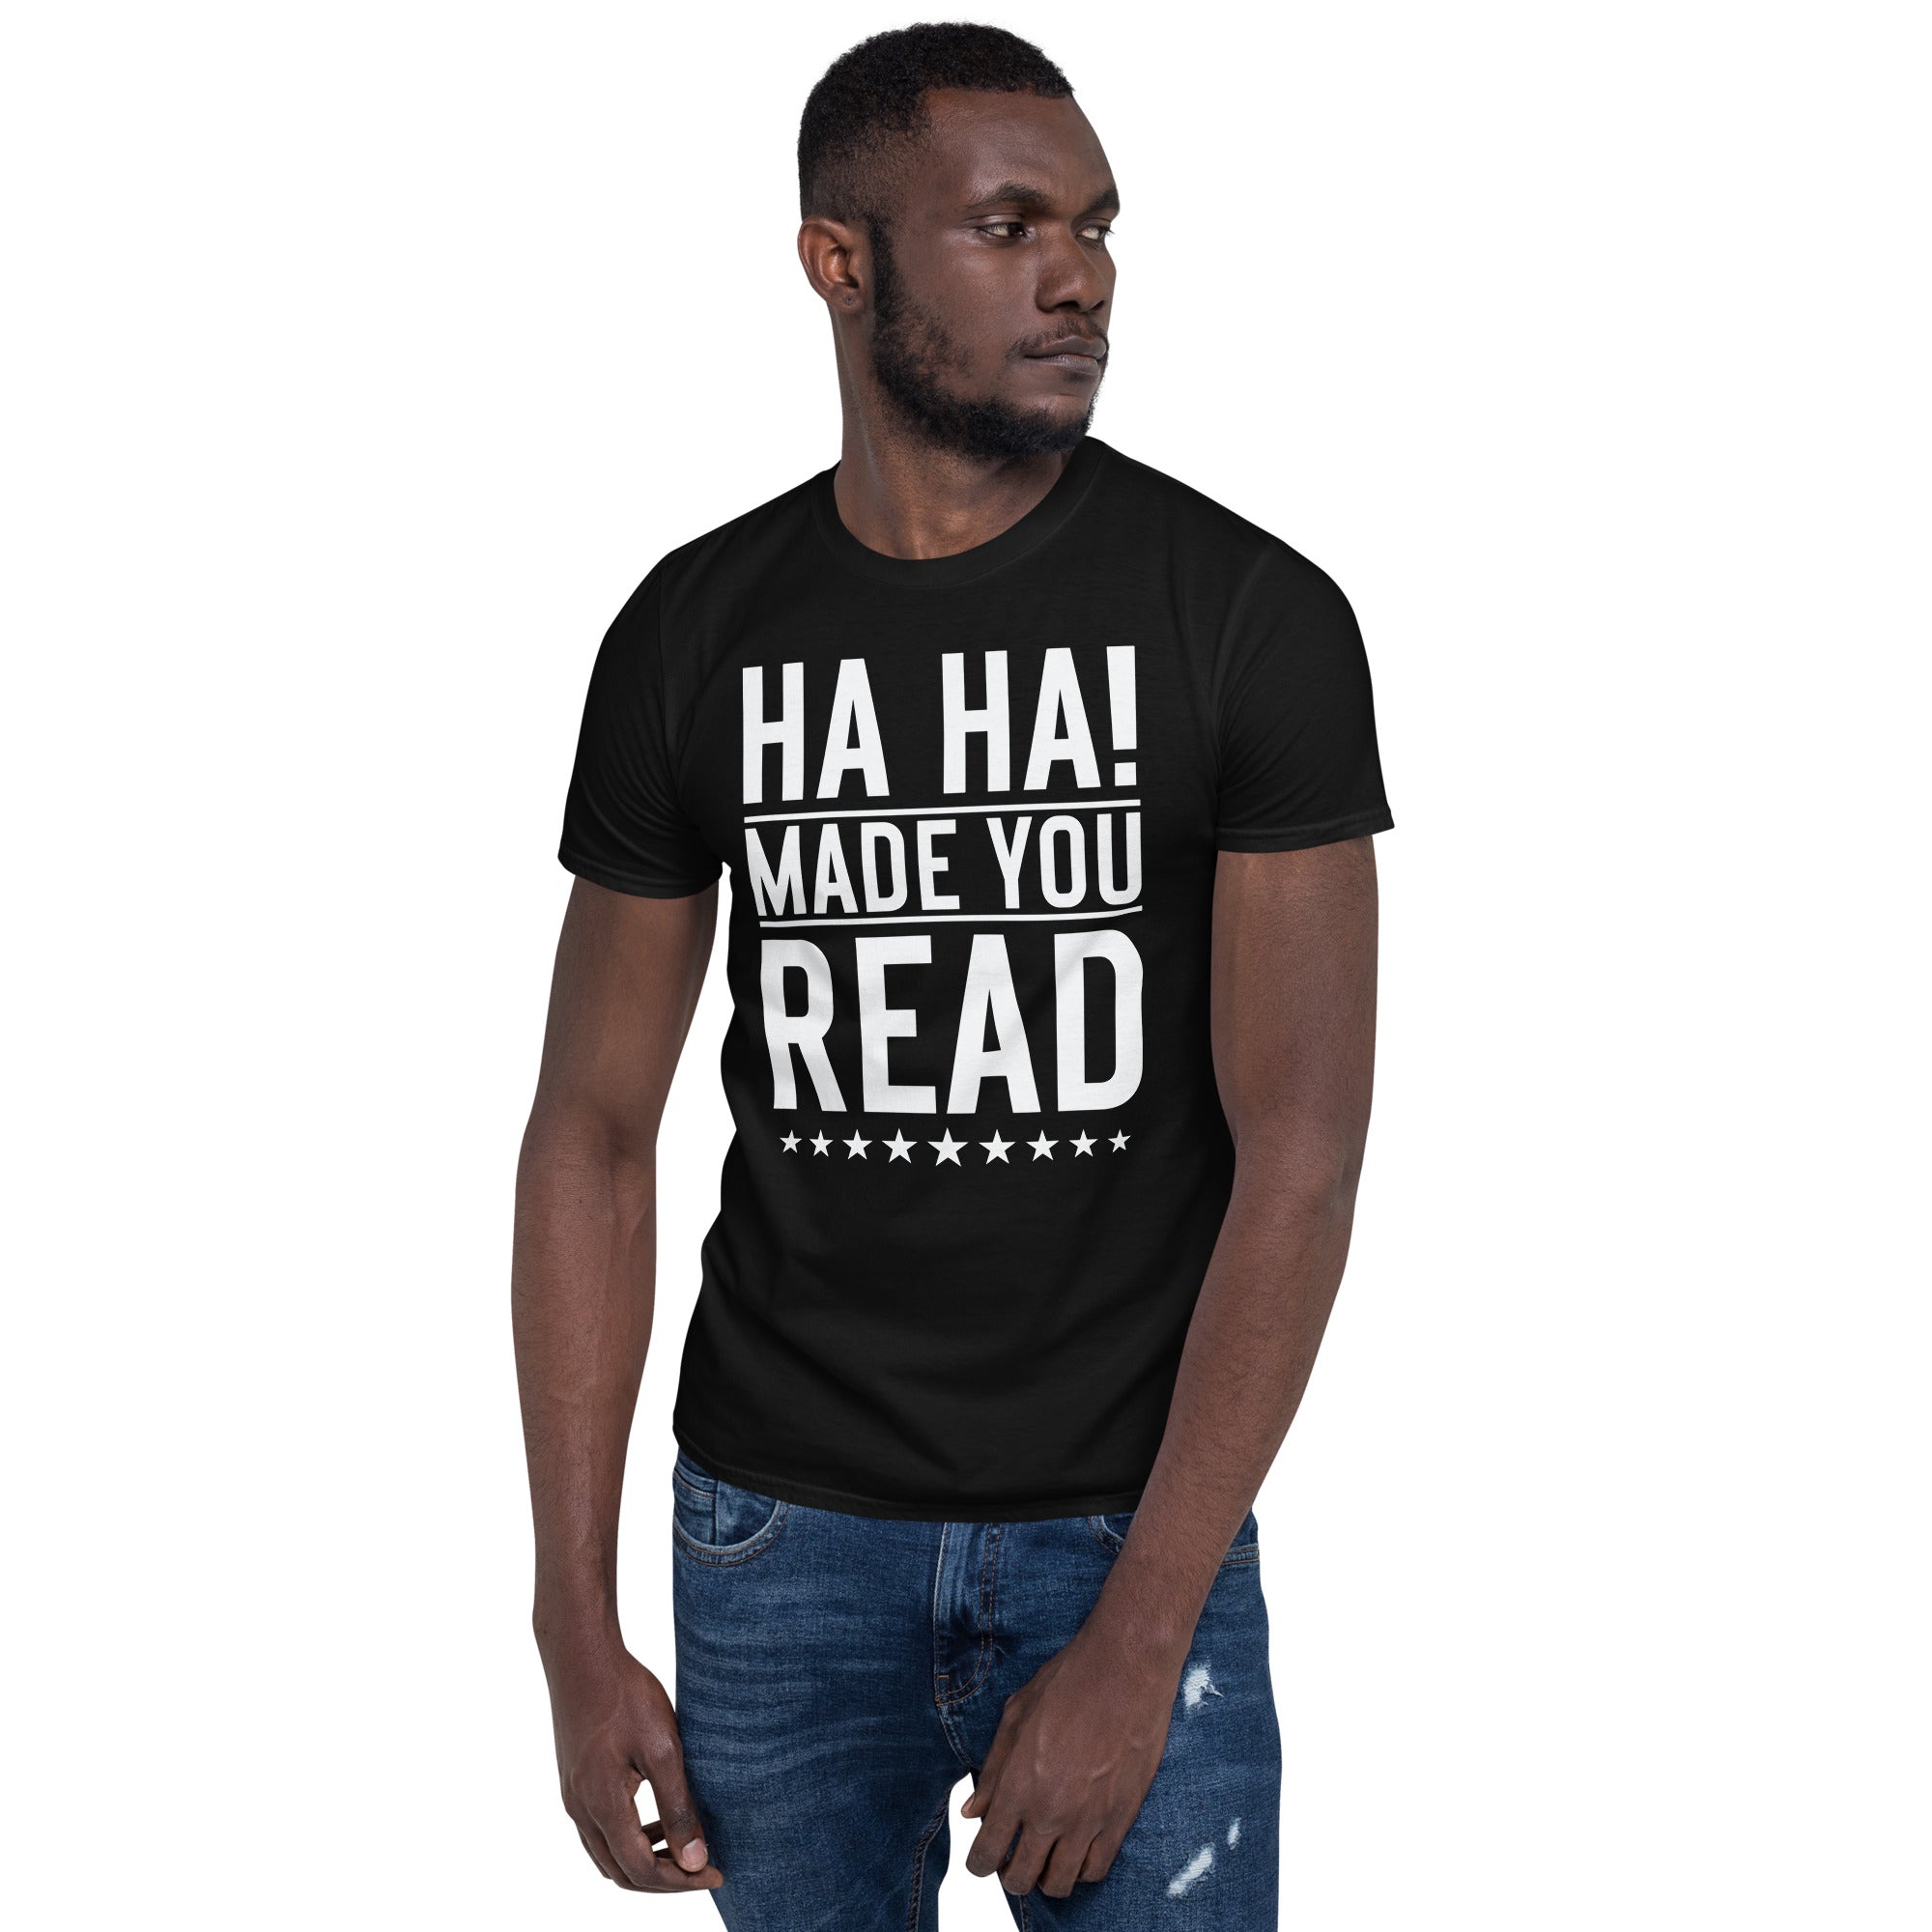 Ha Ha! Made You Read - Short-Sleeve Unisex T-Shirt